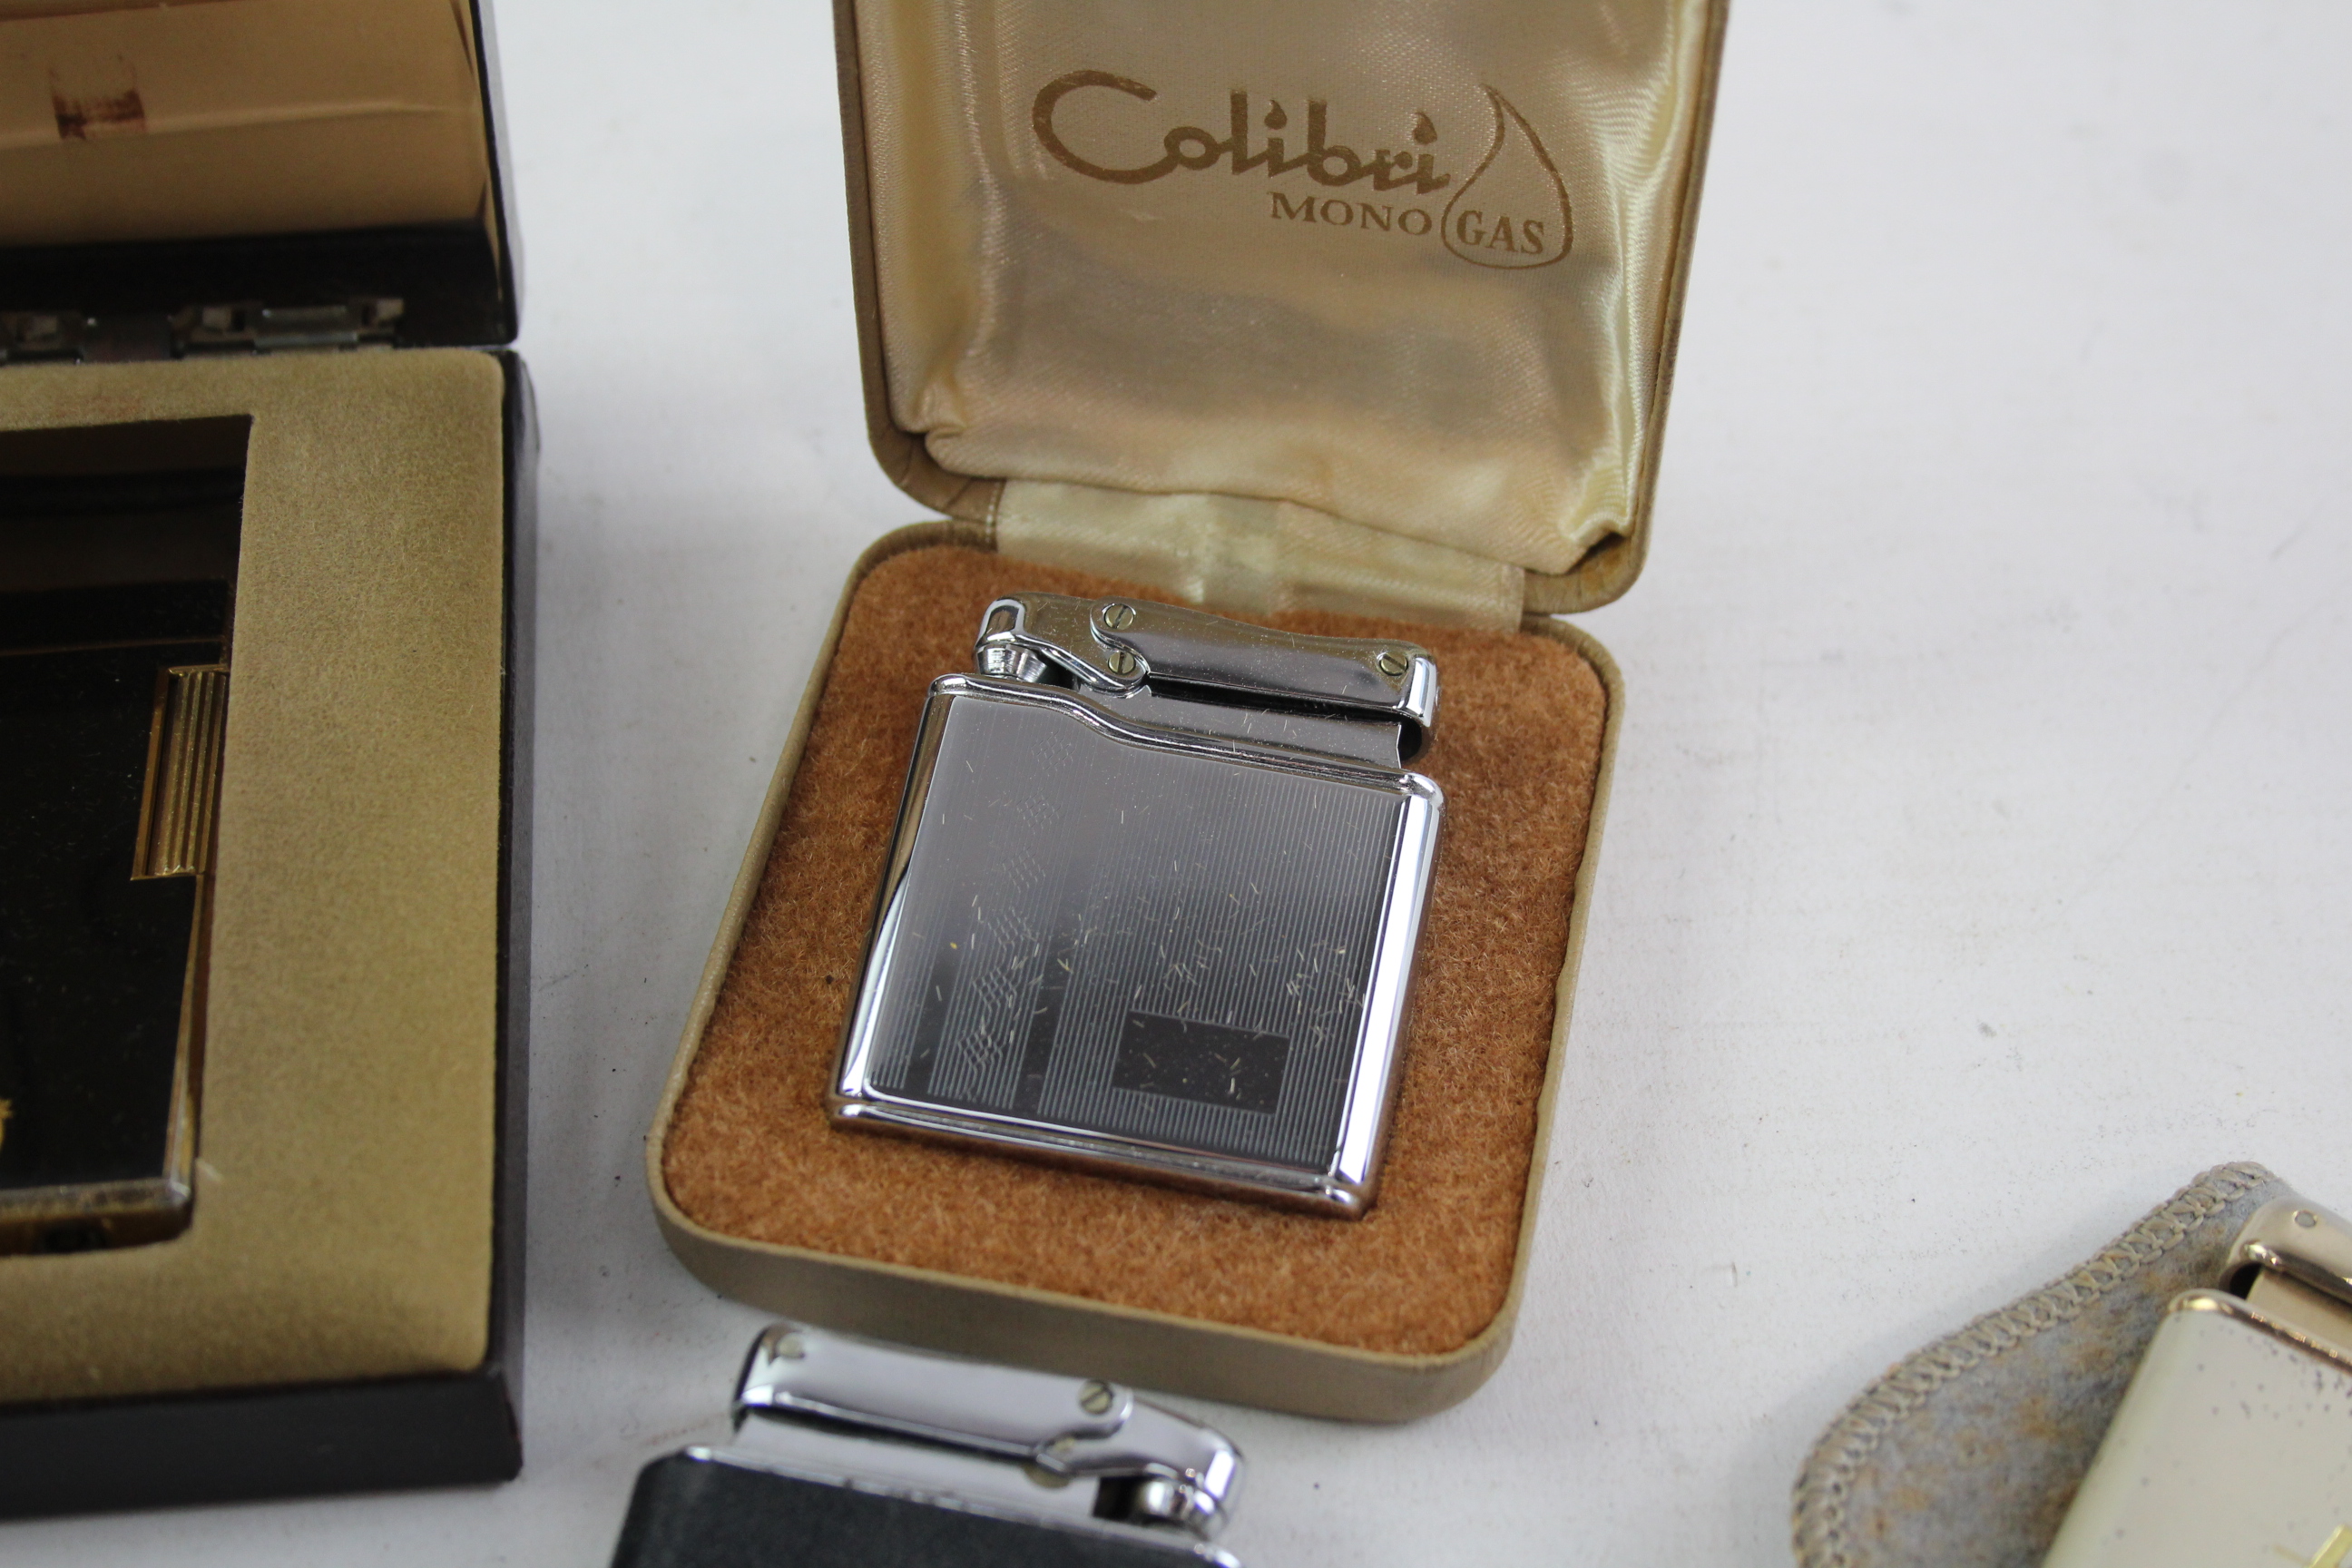 13 x Assorted Vintage COLIBRI Cigarette Lighters Inc Monopol, Boxed, Executive 696124 - Image 3 of 6